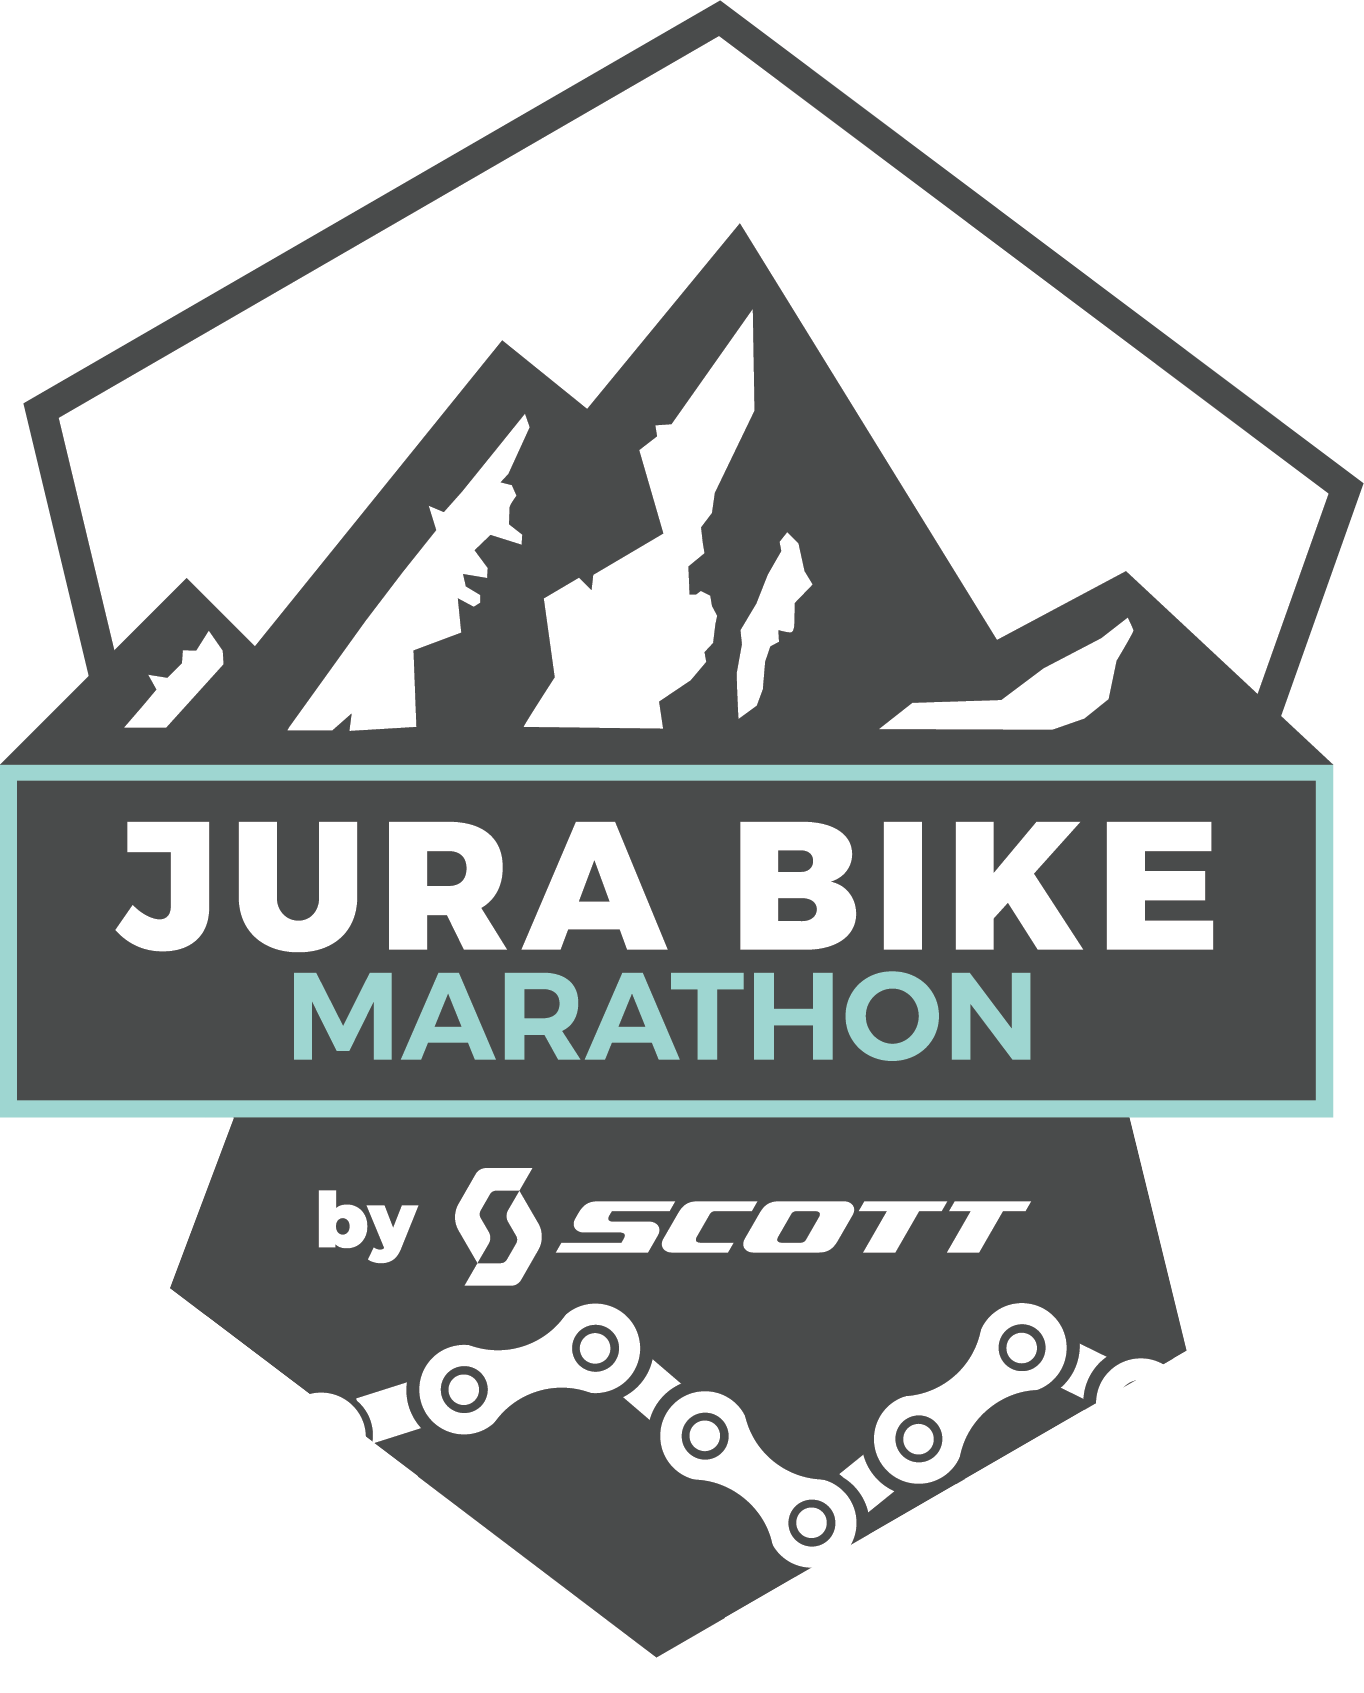 Jura bike marathon